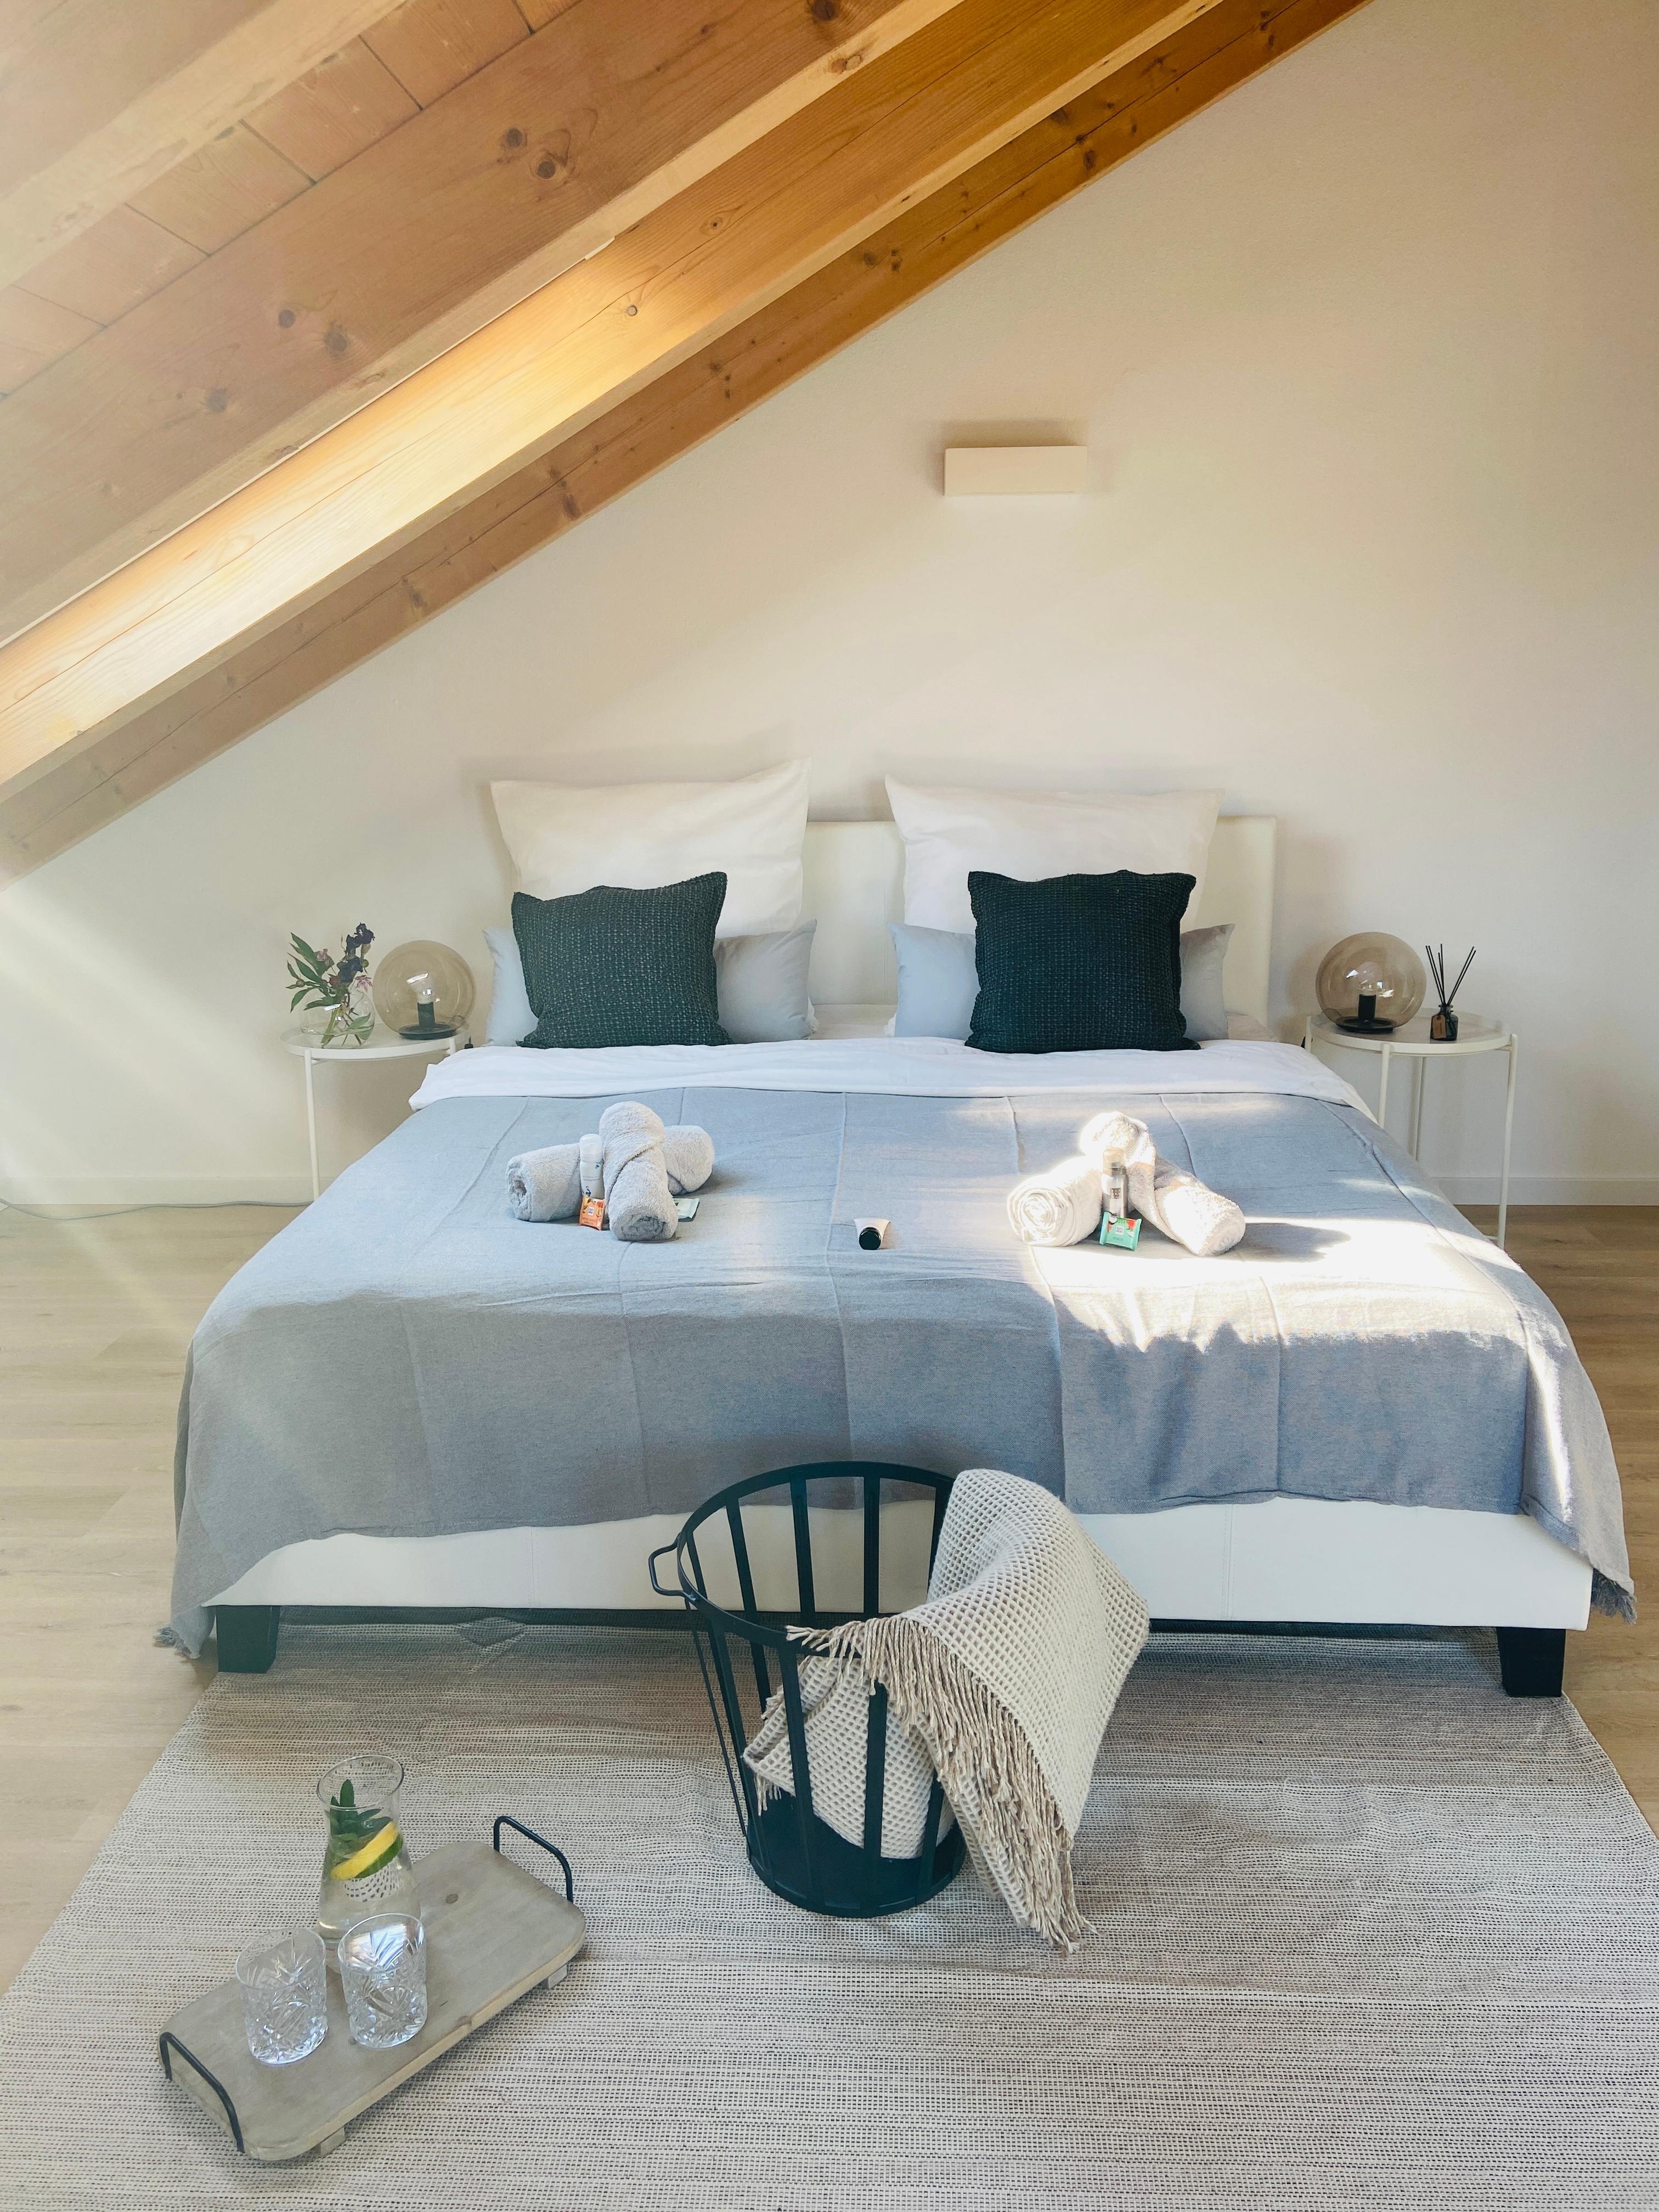 Die Gäste können kommen 🛏
#gästezimmer #couchstyle #dachgeschosszimmer #hausumbau #dachgeschossliebe